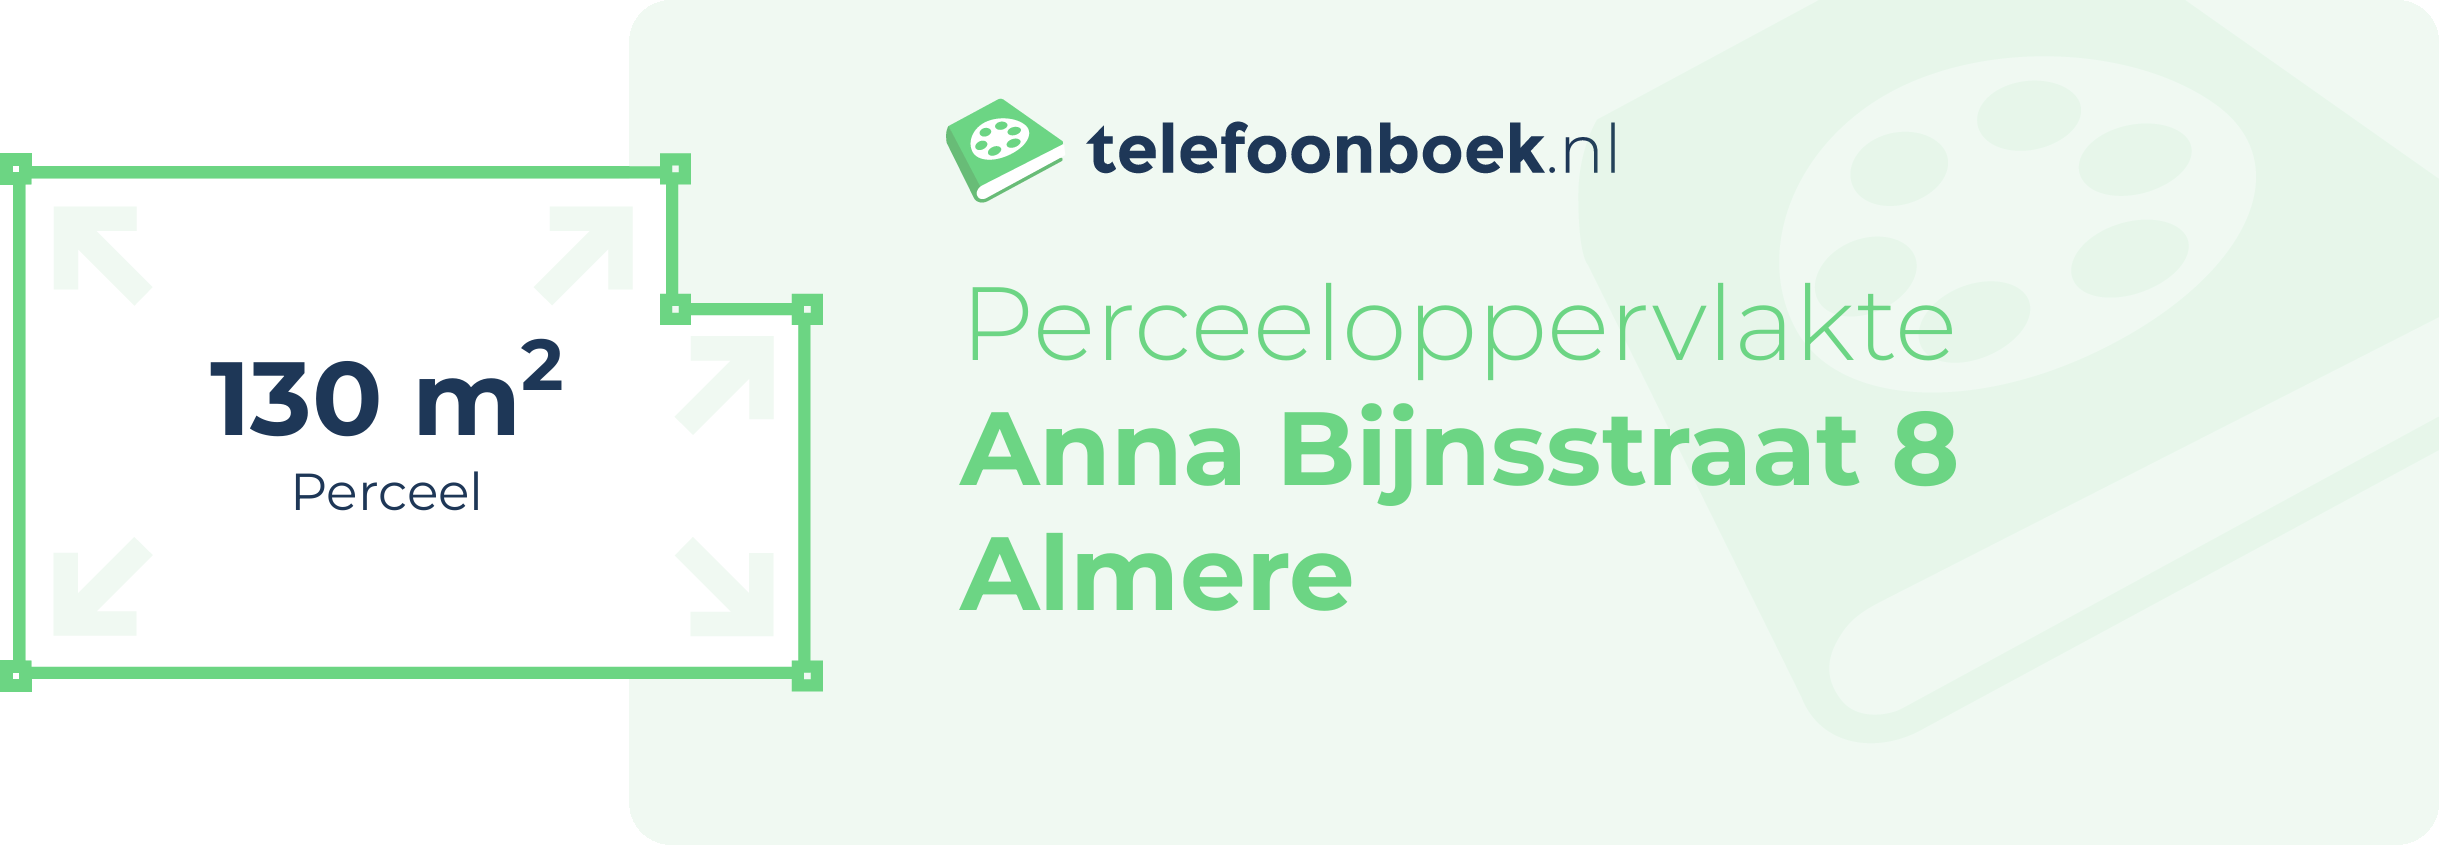 Perceeloppervlakte Anna Bijnsstraat 8 Almere